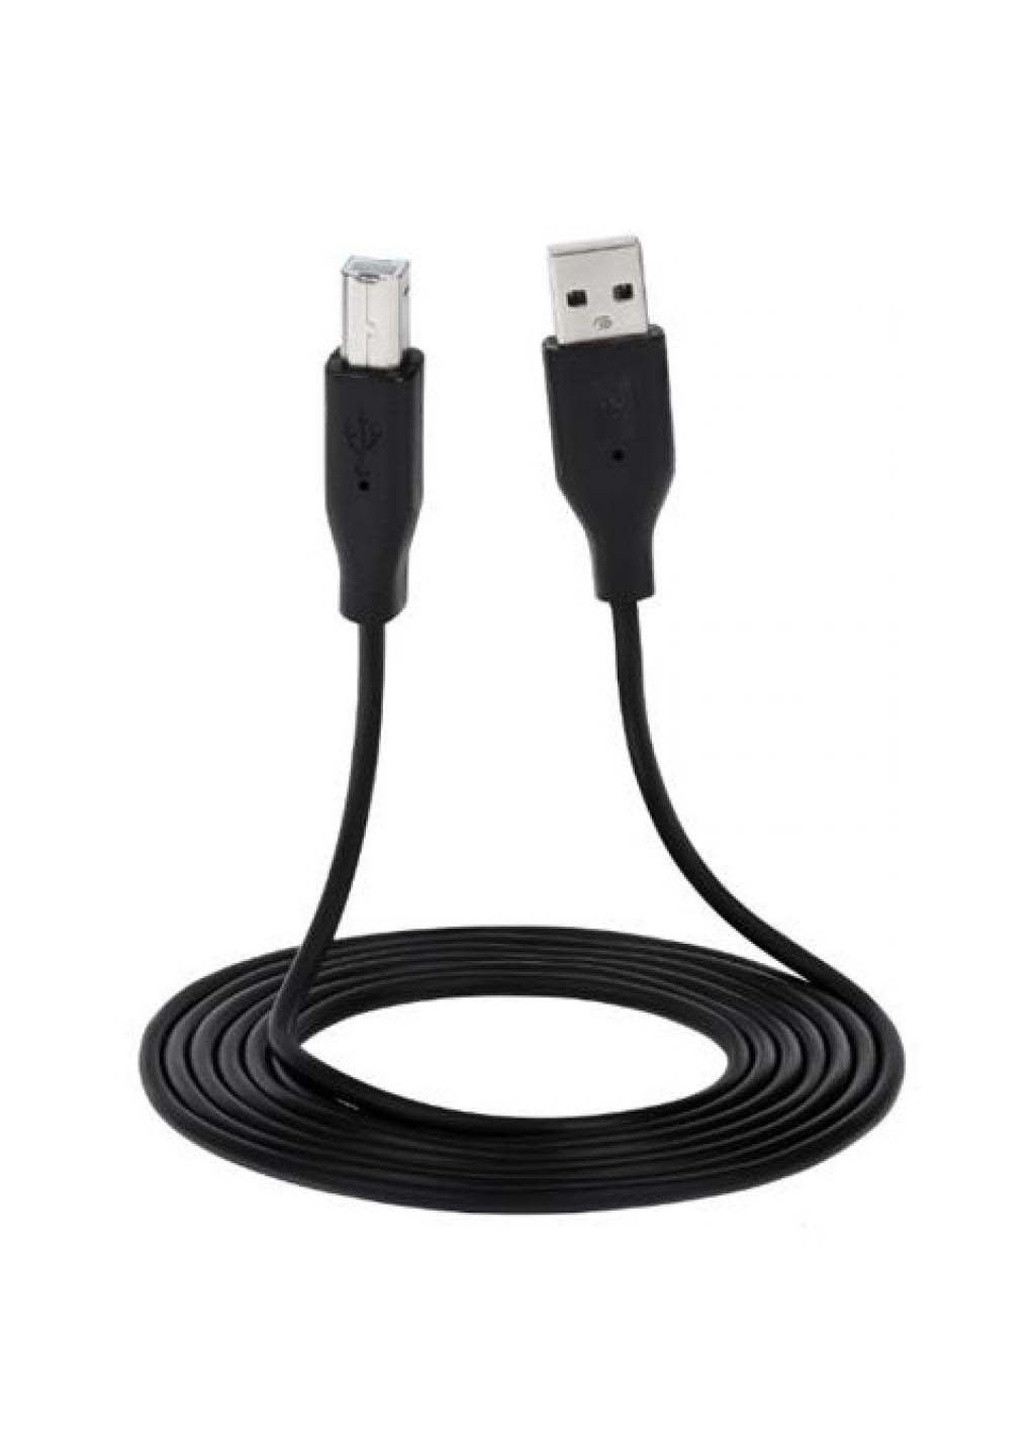 Дата кабель USB 2.0 AM / AF 1.8m black (-W-3168M3) 2E usb 2.0 am/af 1.8m black (239382922)